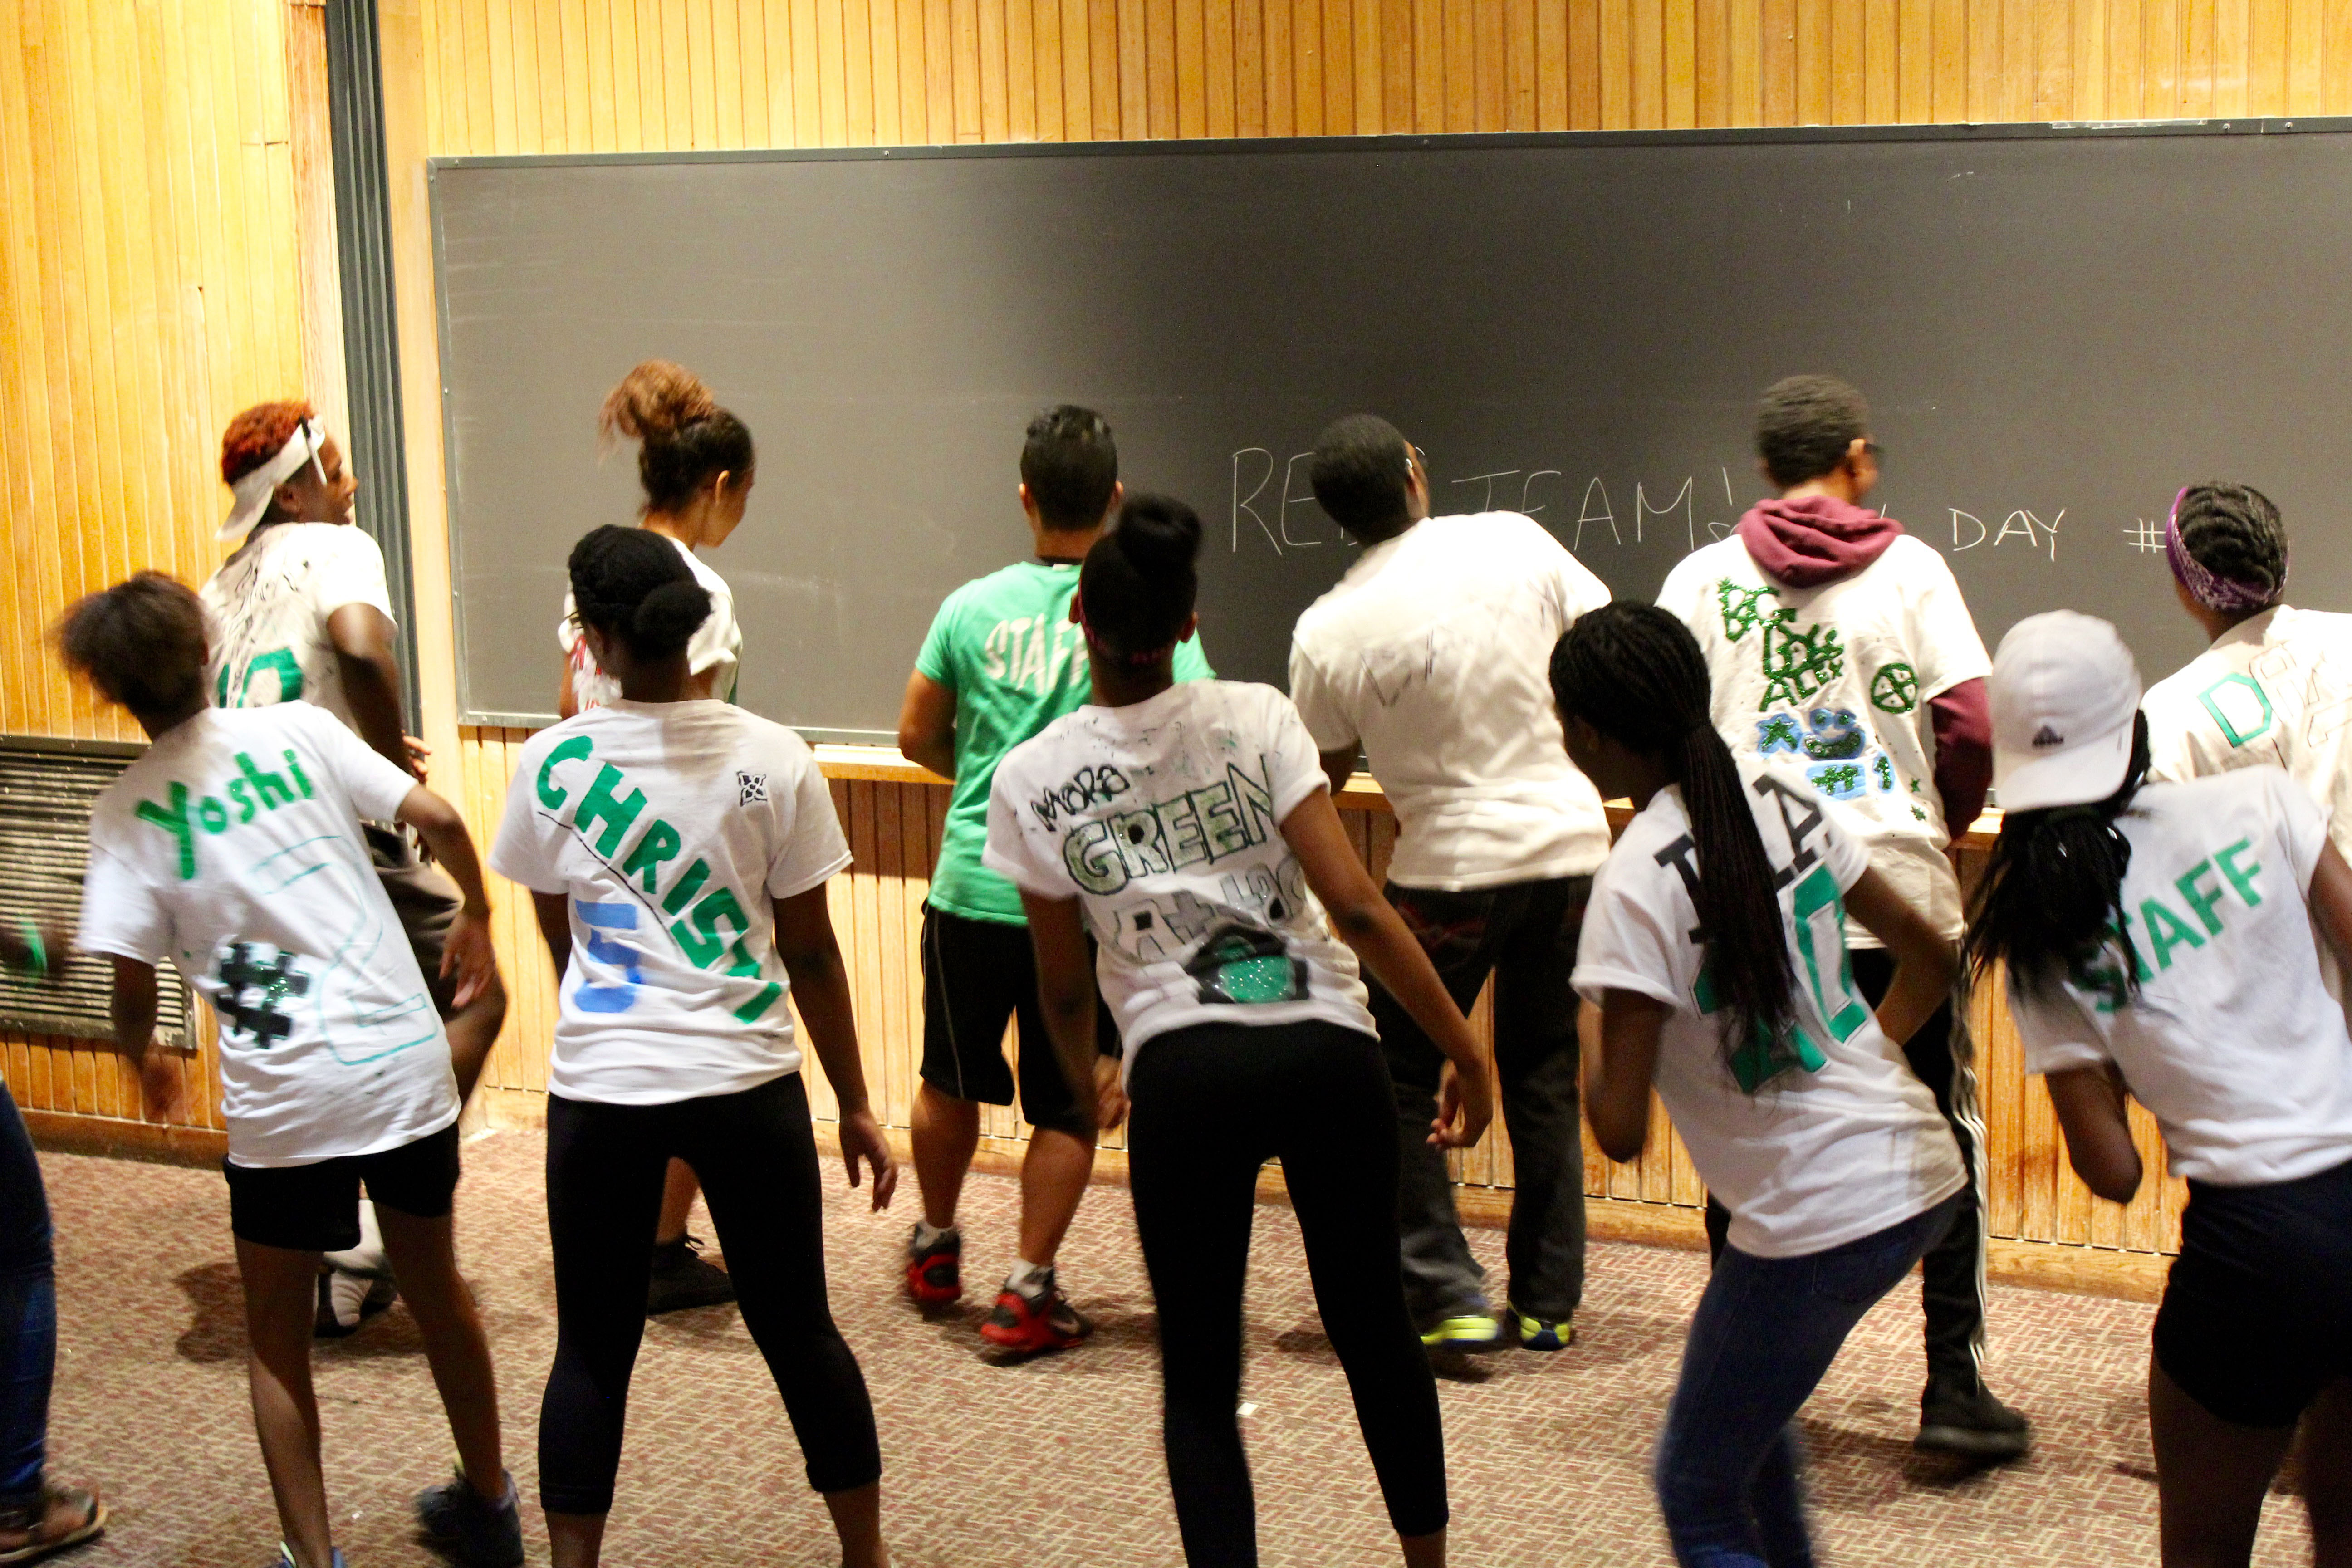 Green Team make sure their dance flash their individual art design on the back of their shirt!